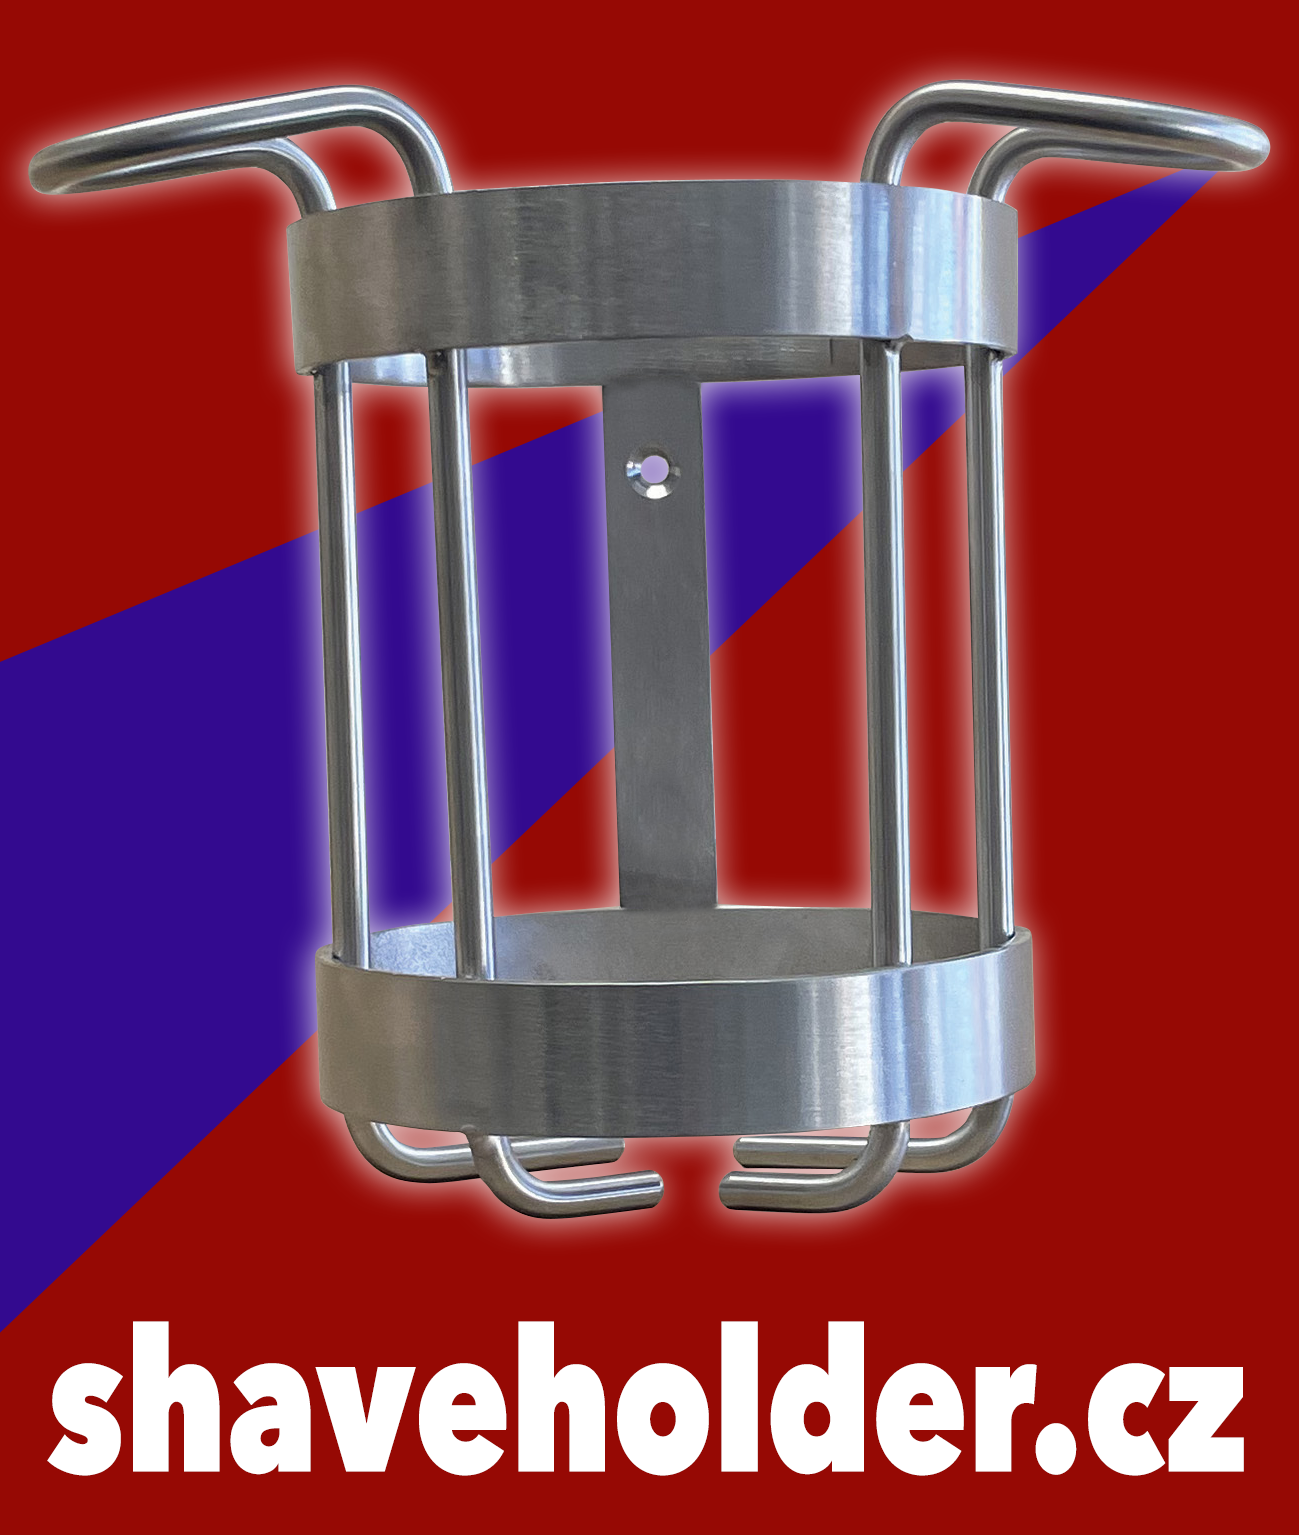 Shaveholder-koncept